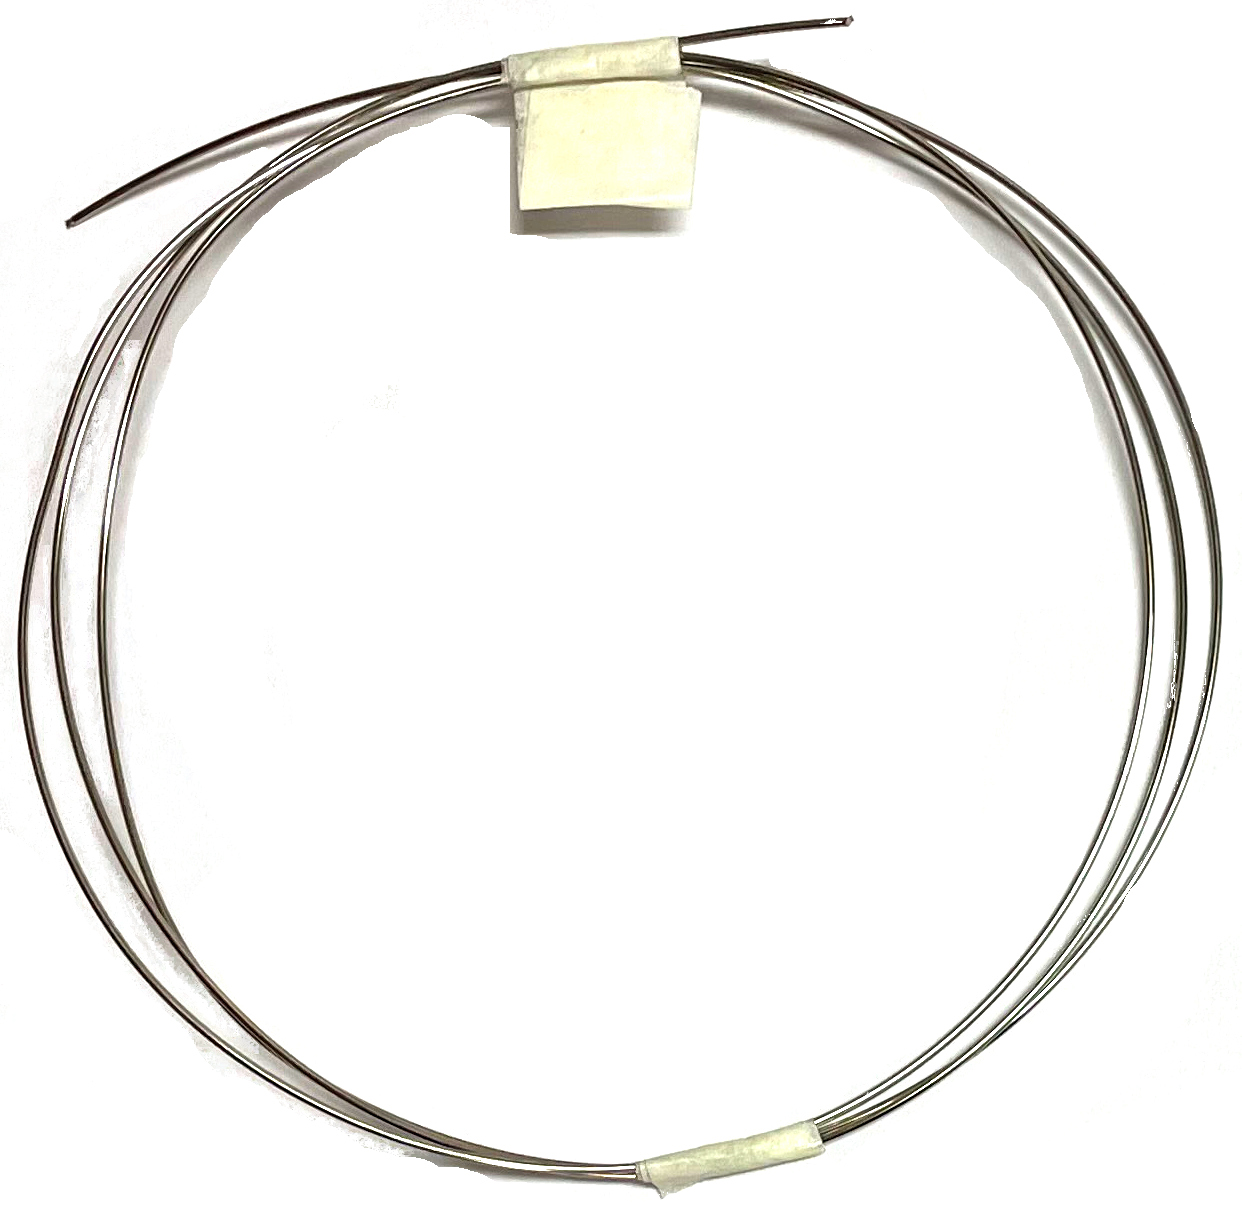 KA051 16 gauge Nichrome Wire rated to cone 10